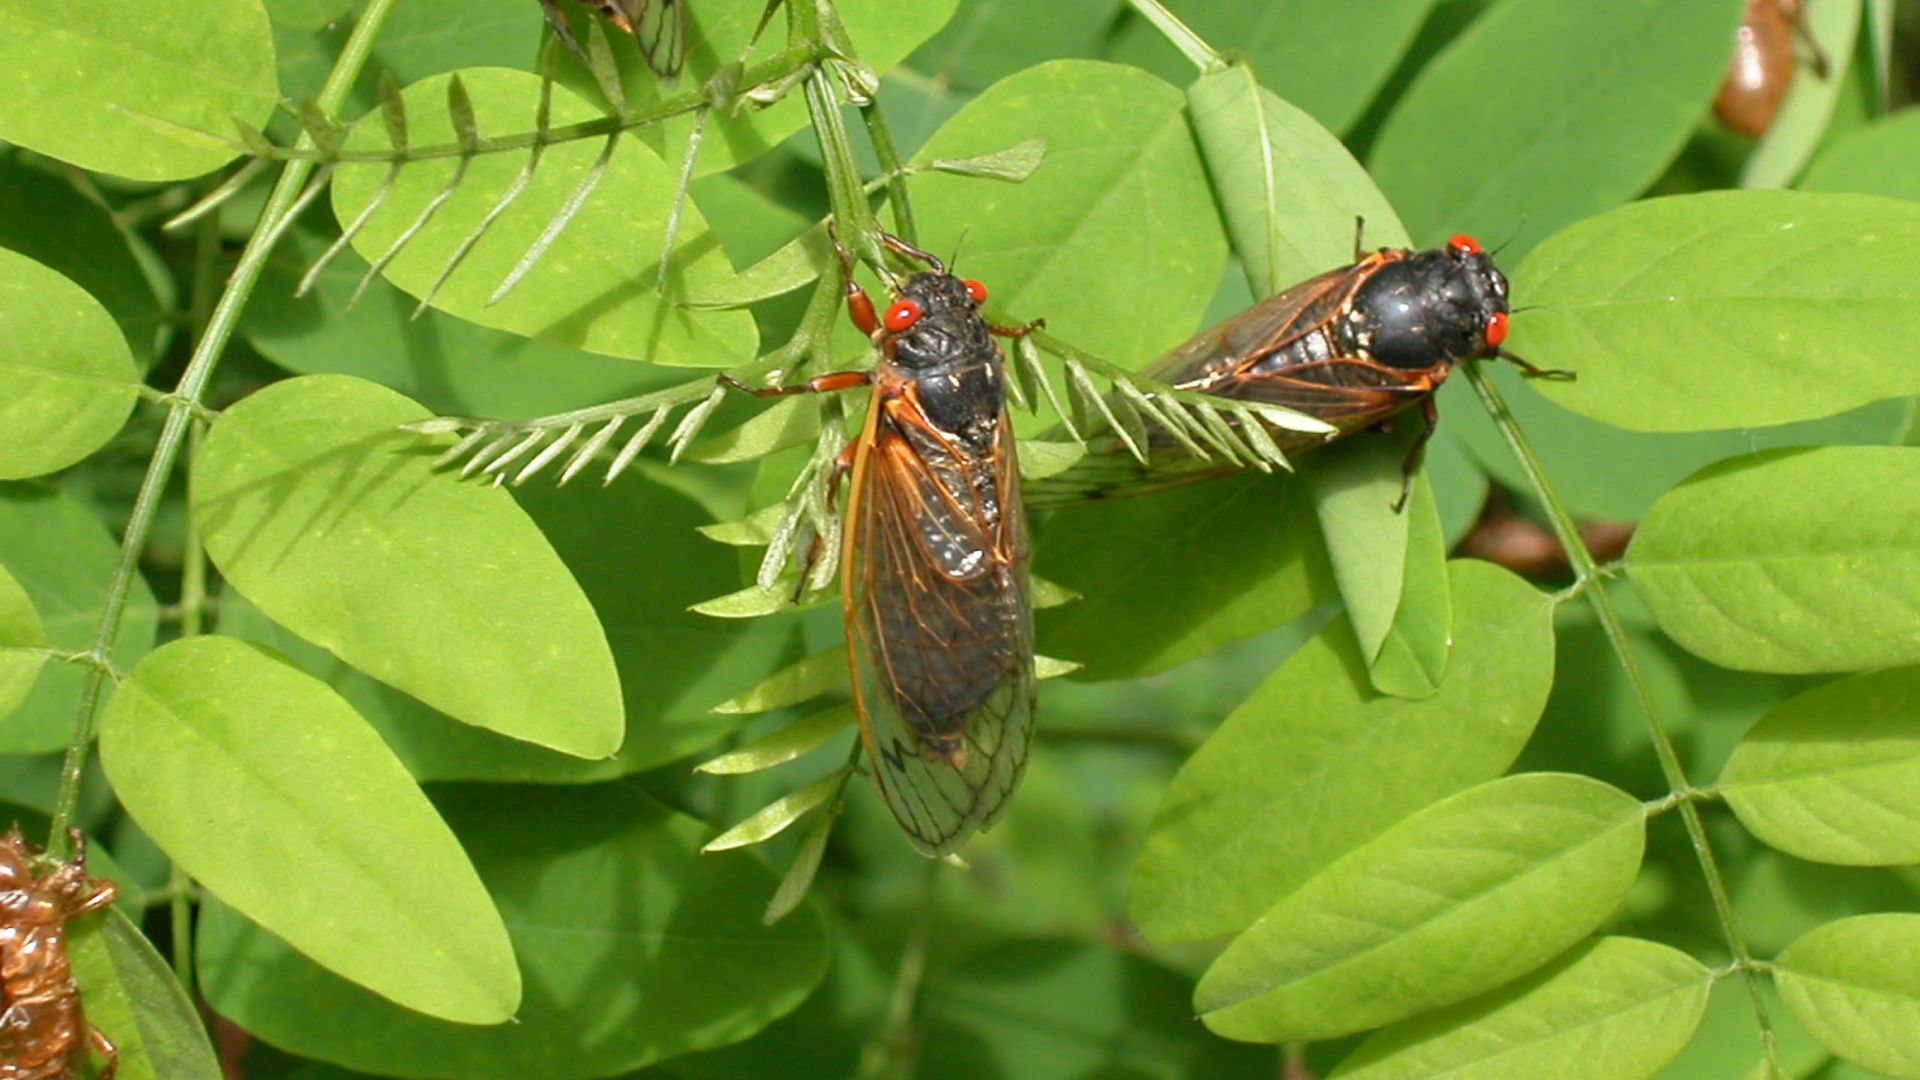 Adult cicadas dry their wings on leaves May 16, 2004 in Reston, Virginia. 